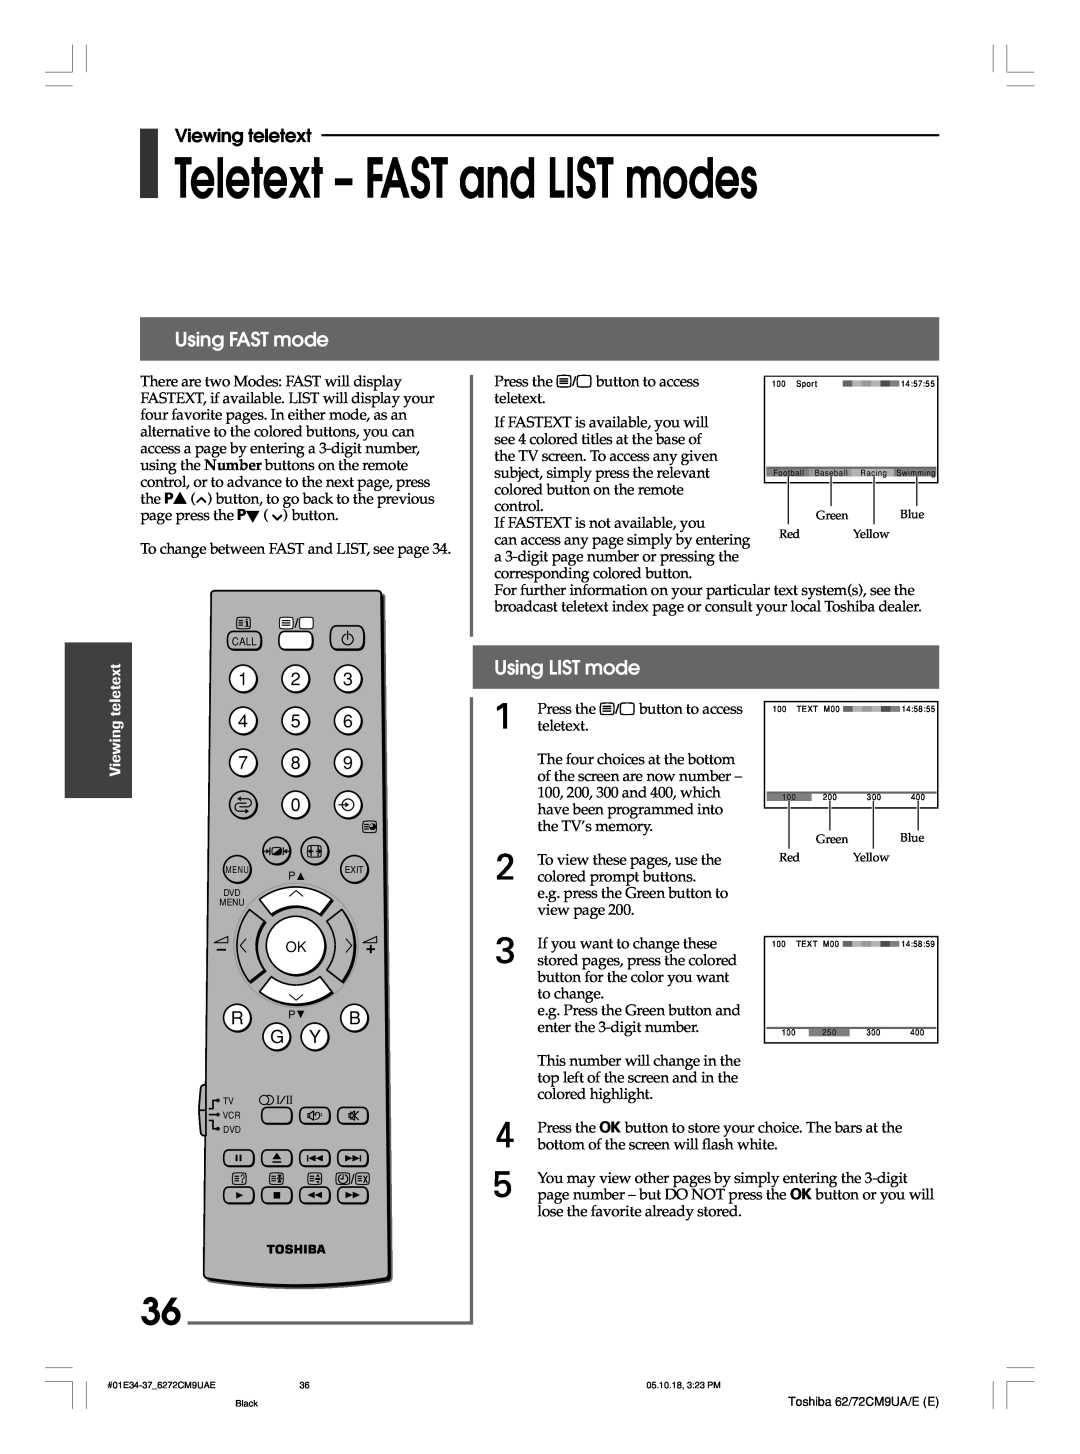 Toshiba 62CM9UA, 72CM9UE Teletext - FAST and LIST modes, Using FAST mode, Using LIST mode, R P B G Y, Viewing teletext 